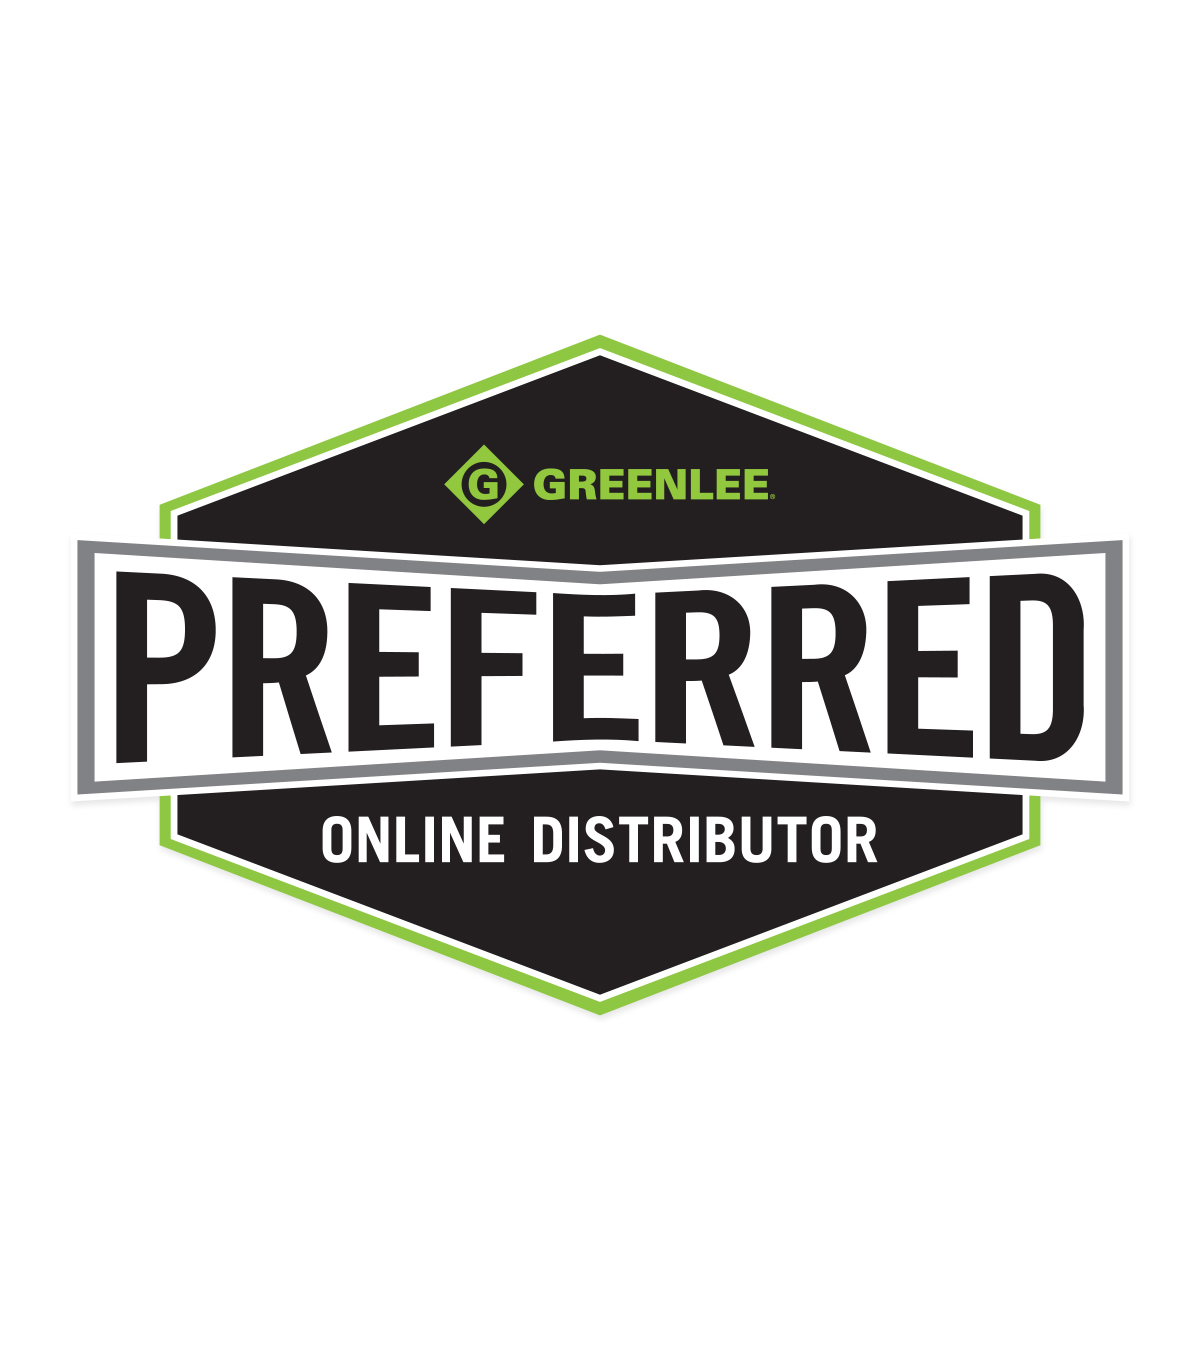 Greenlee Preferred Online Distributor